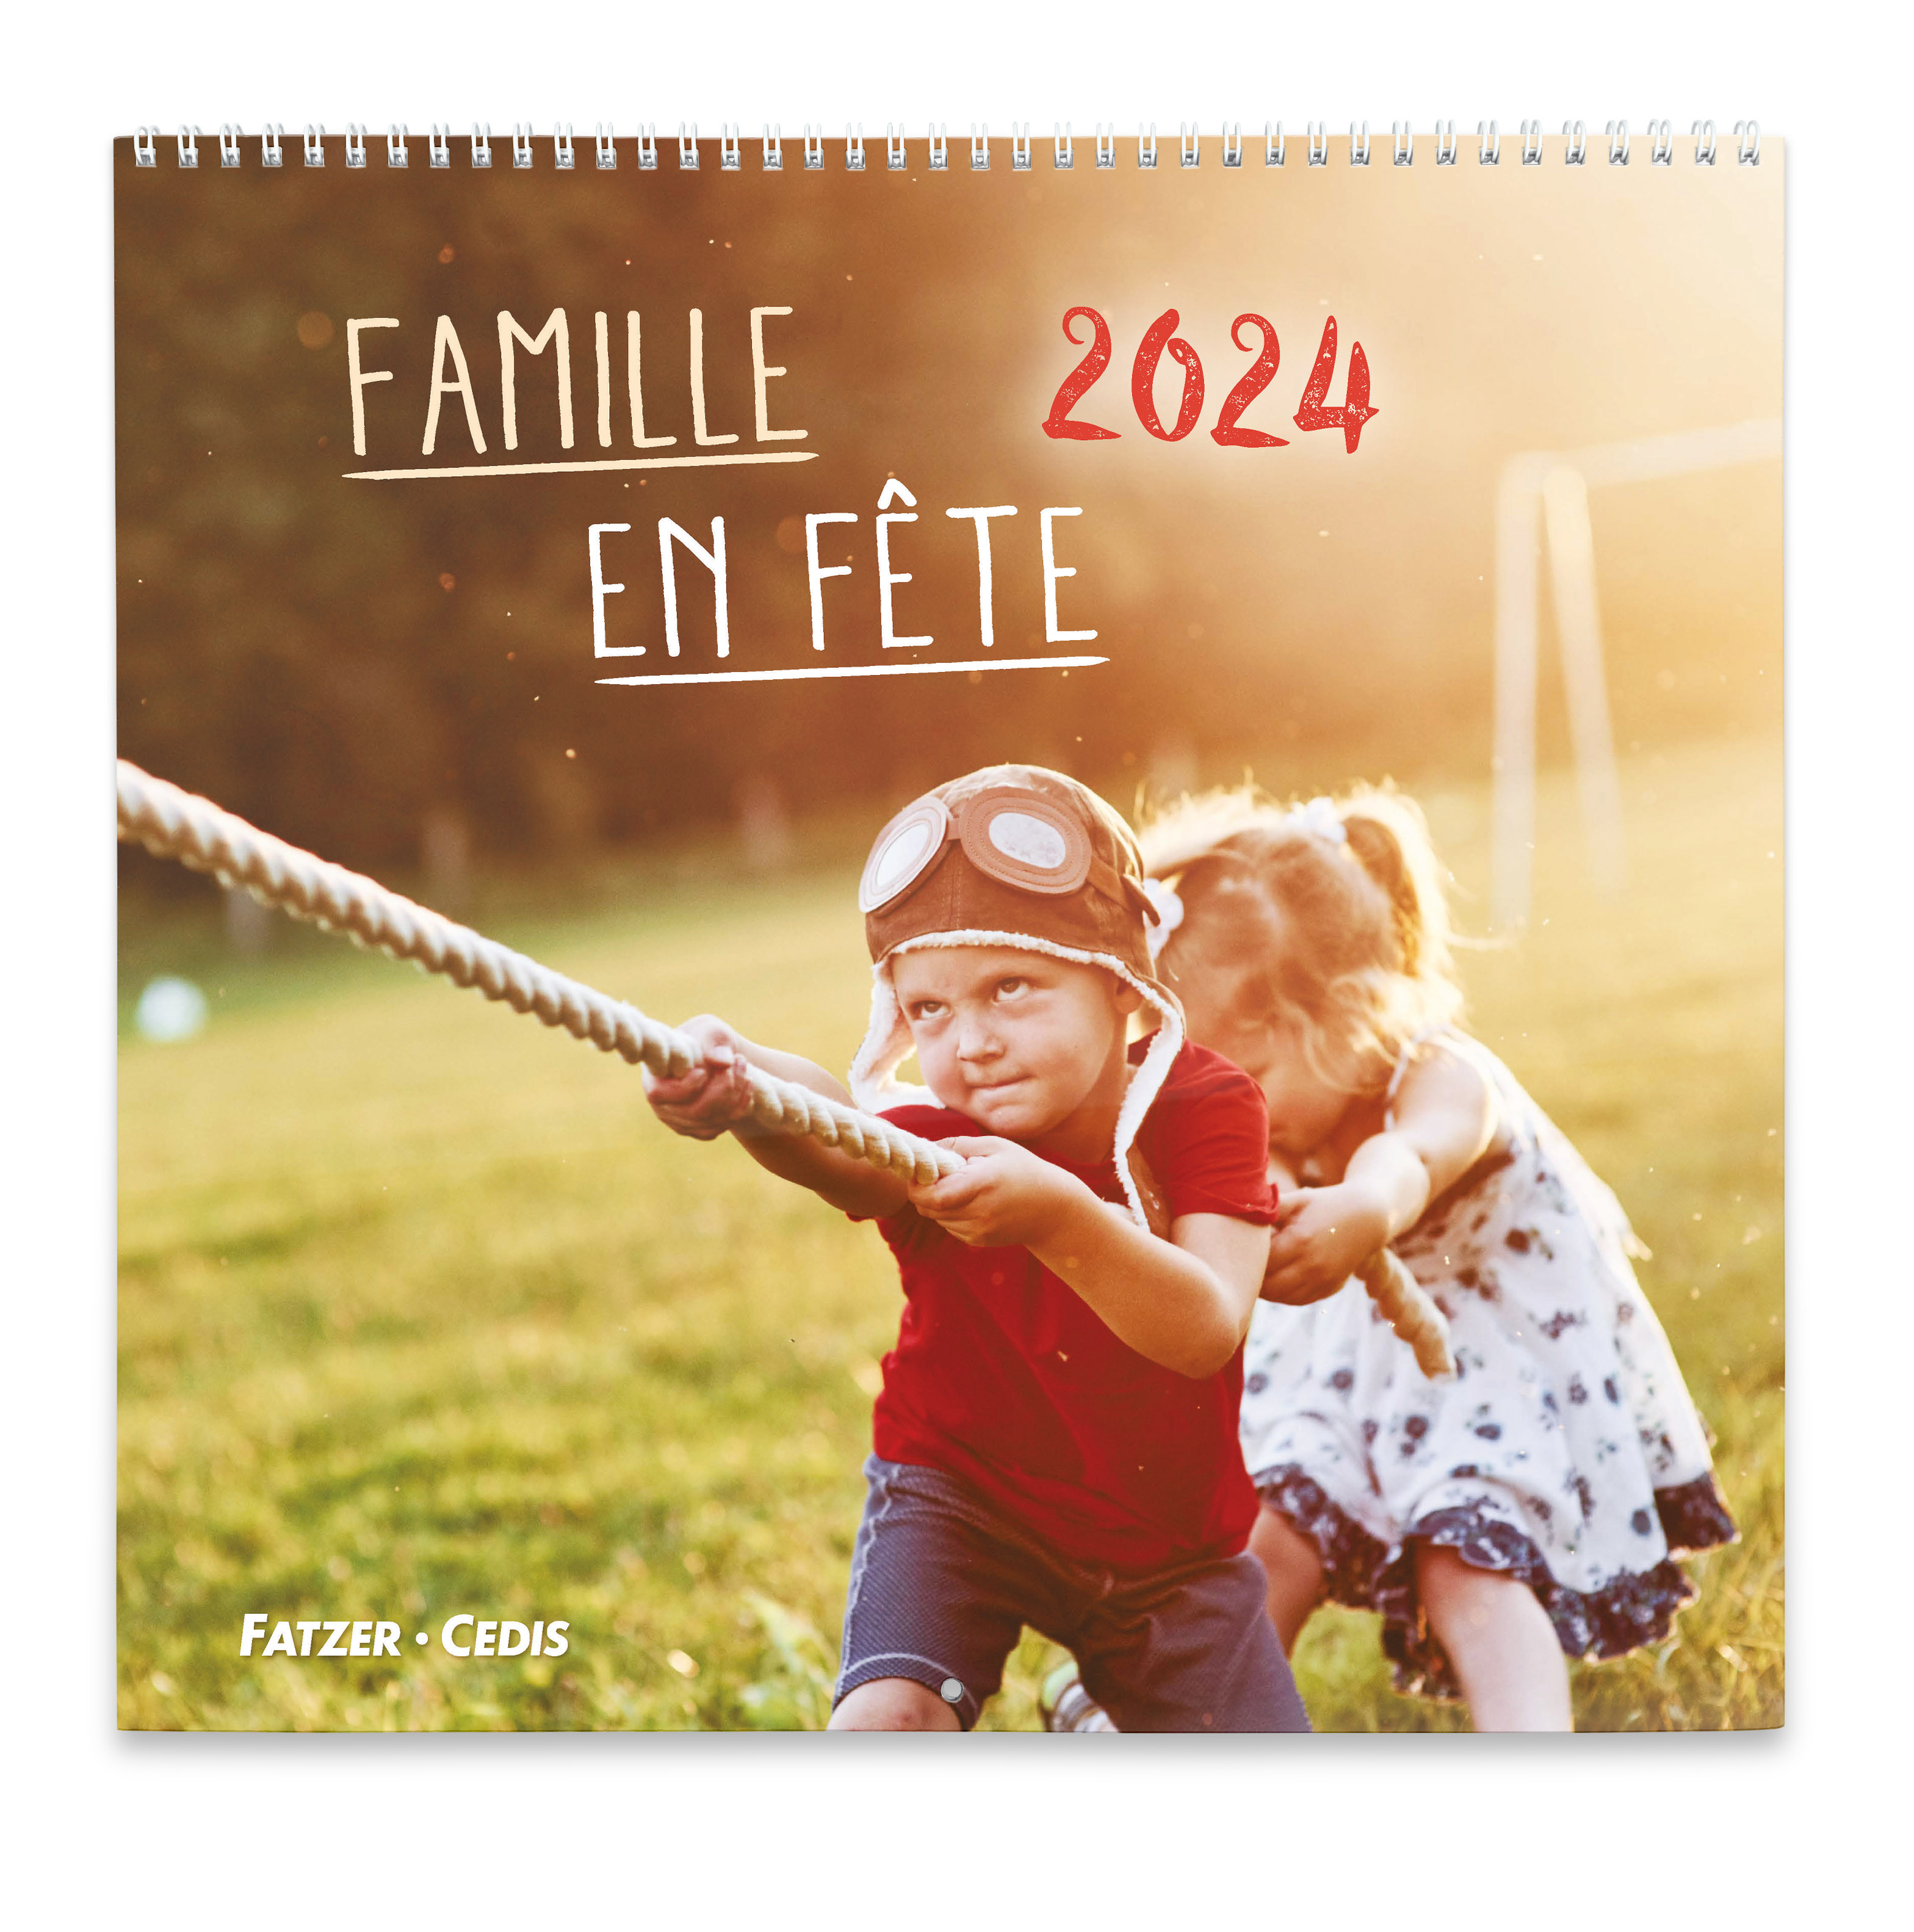 Famille en fete 2024 calendrier